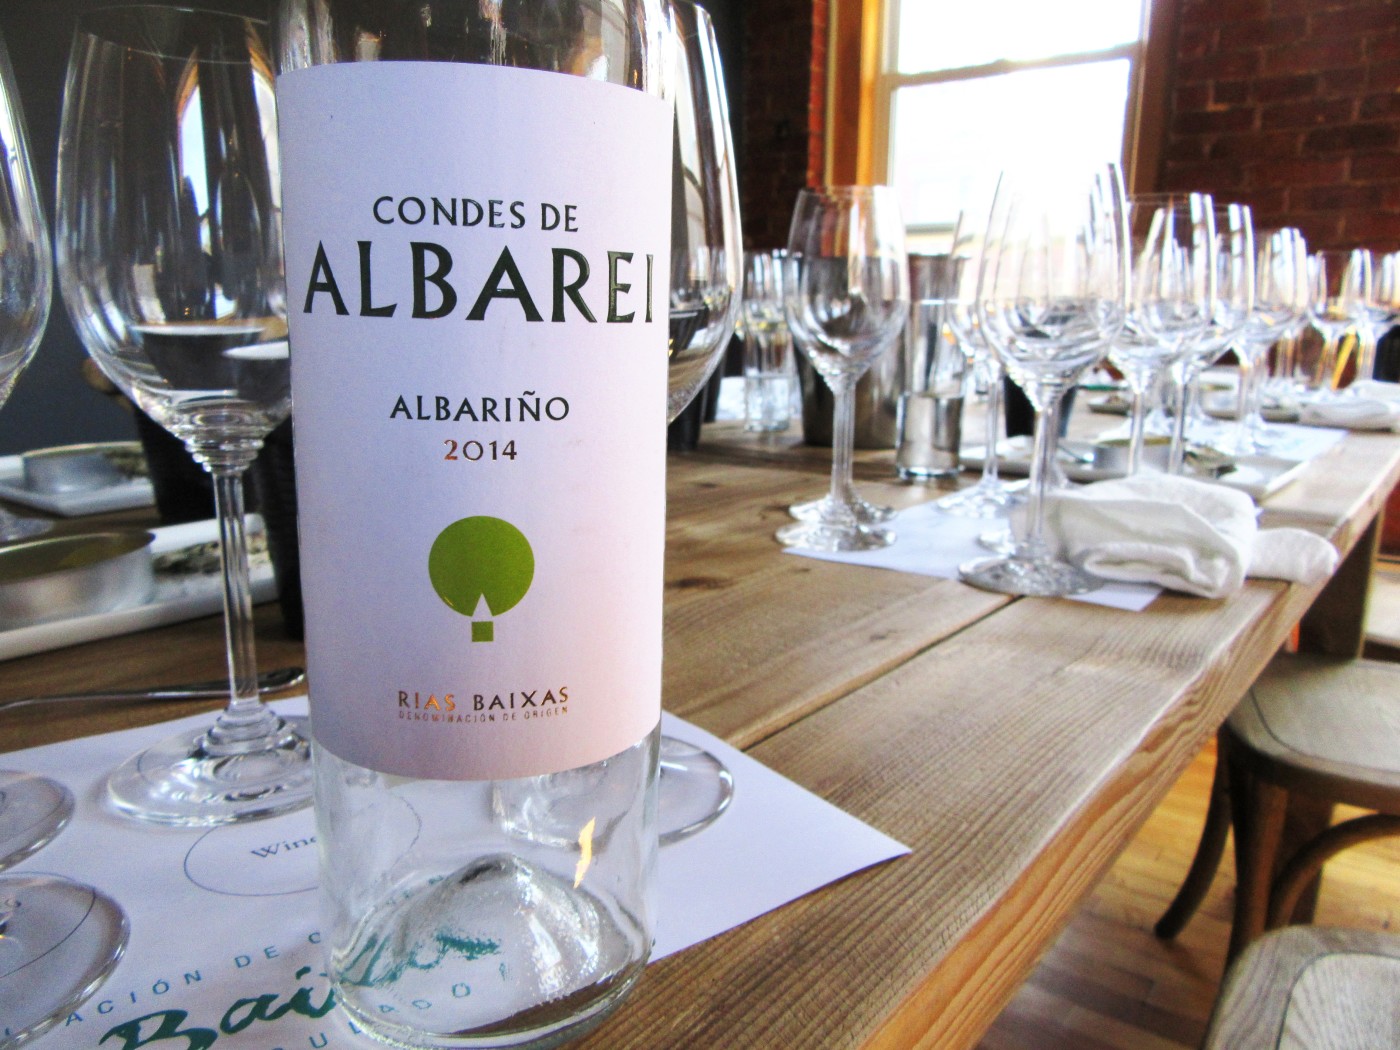 Condes de Albarei, Albariño 2014, Rías Baixas, Spain, Wine Casual